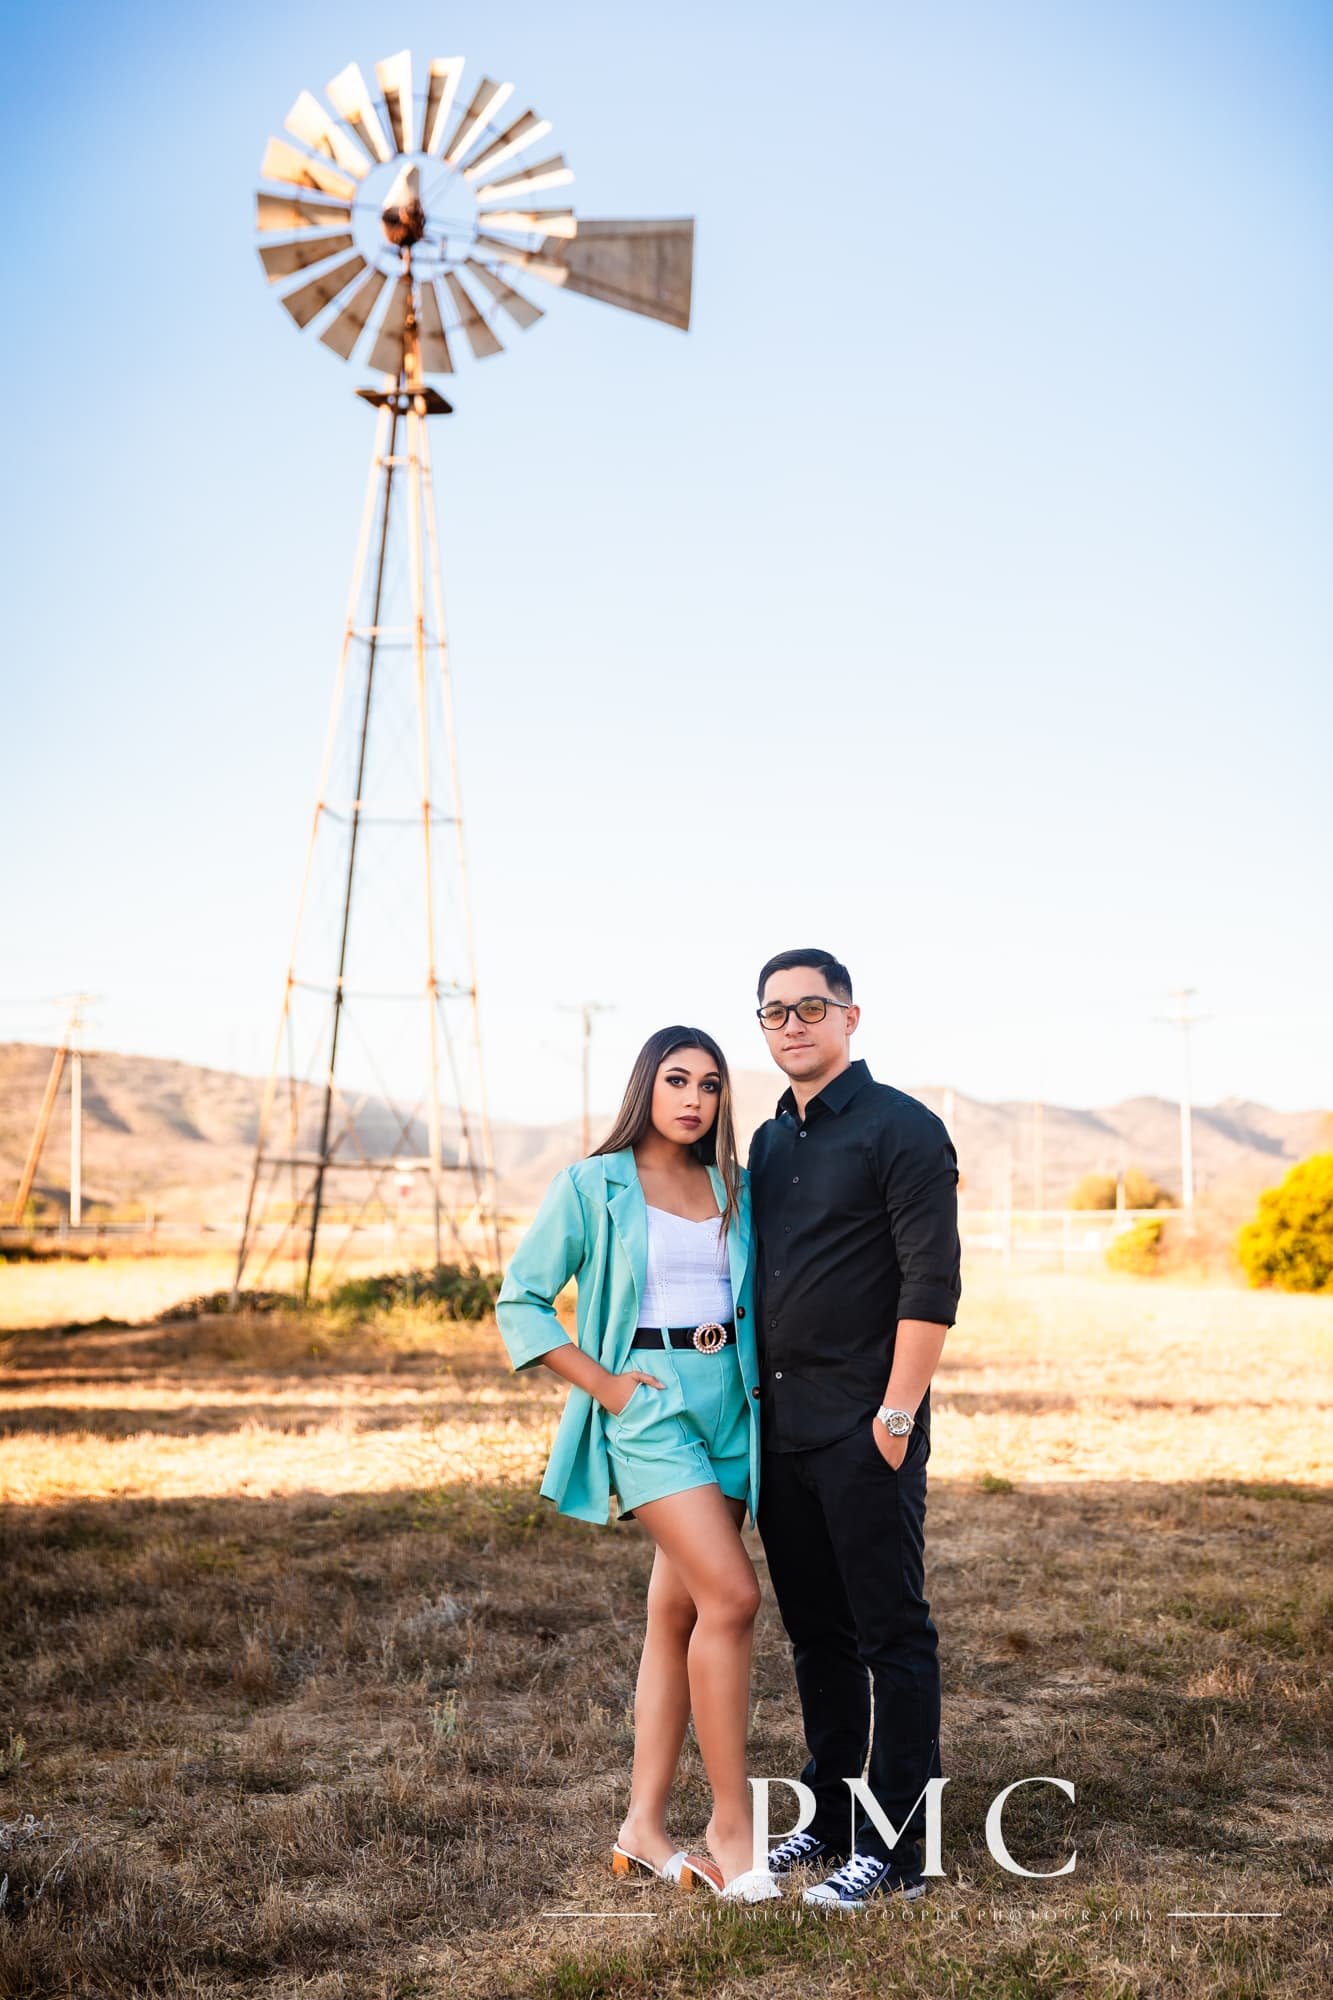 Camp Pendleton Couples Engagement Portraits - Best San Diego Wedding Photographer-9.jpg